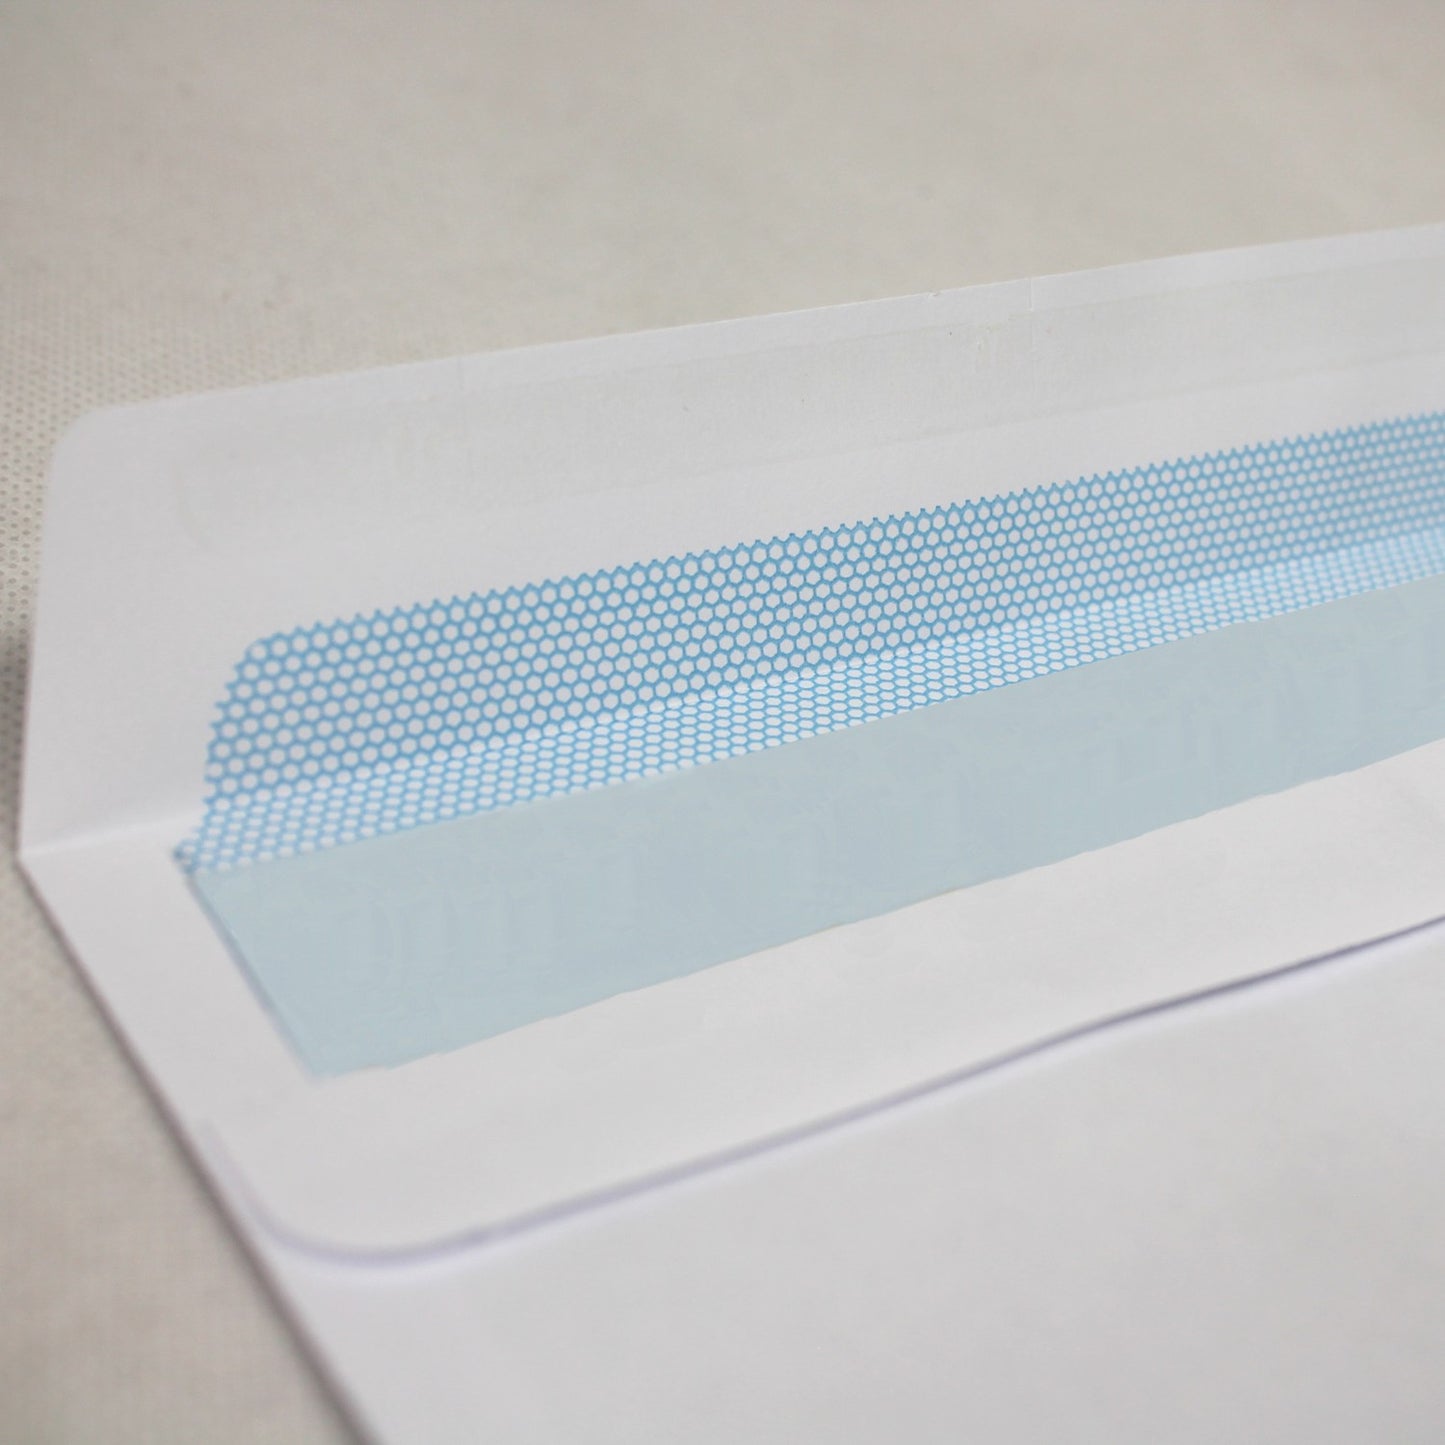 110x220mm DL White Self Seal Envelopes (Window 35x90mm)